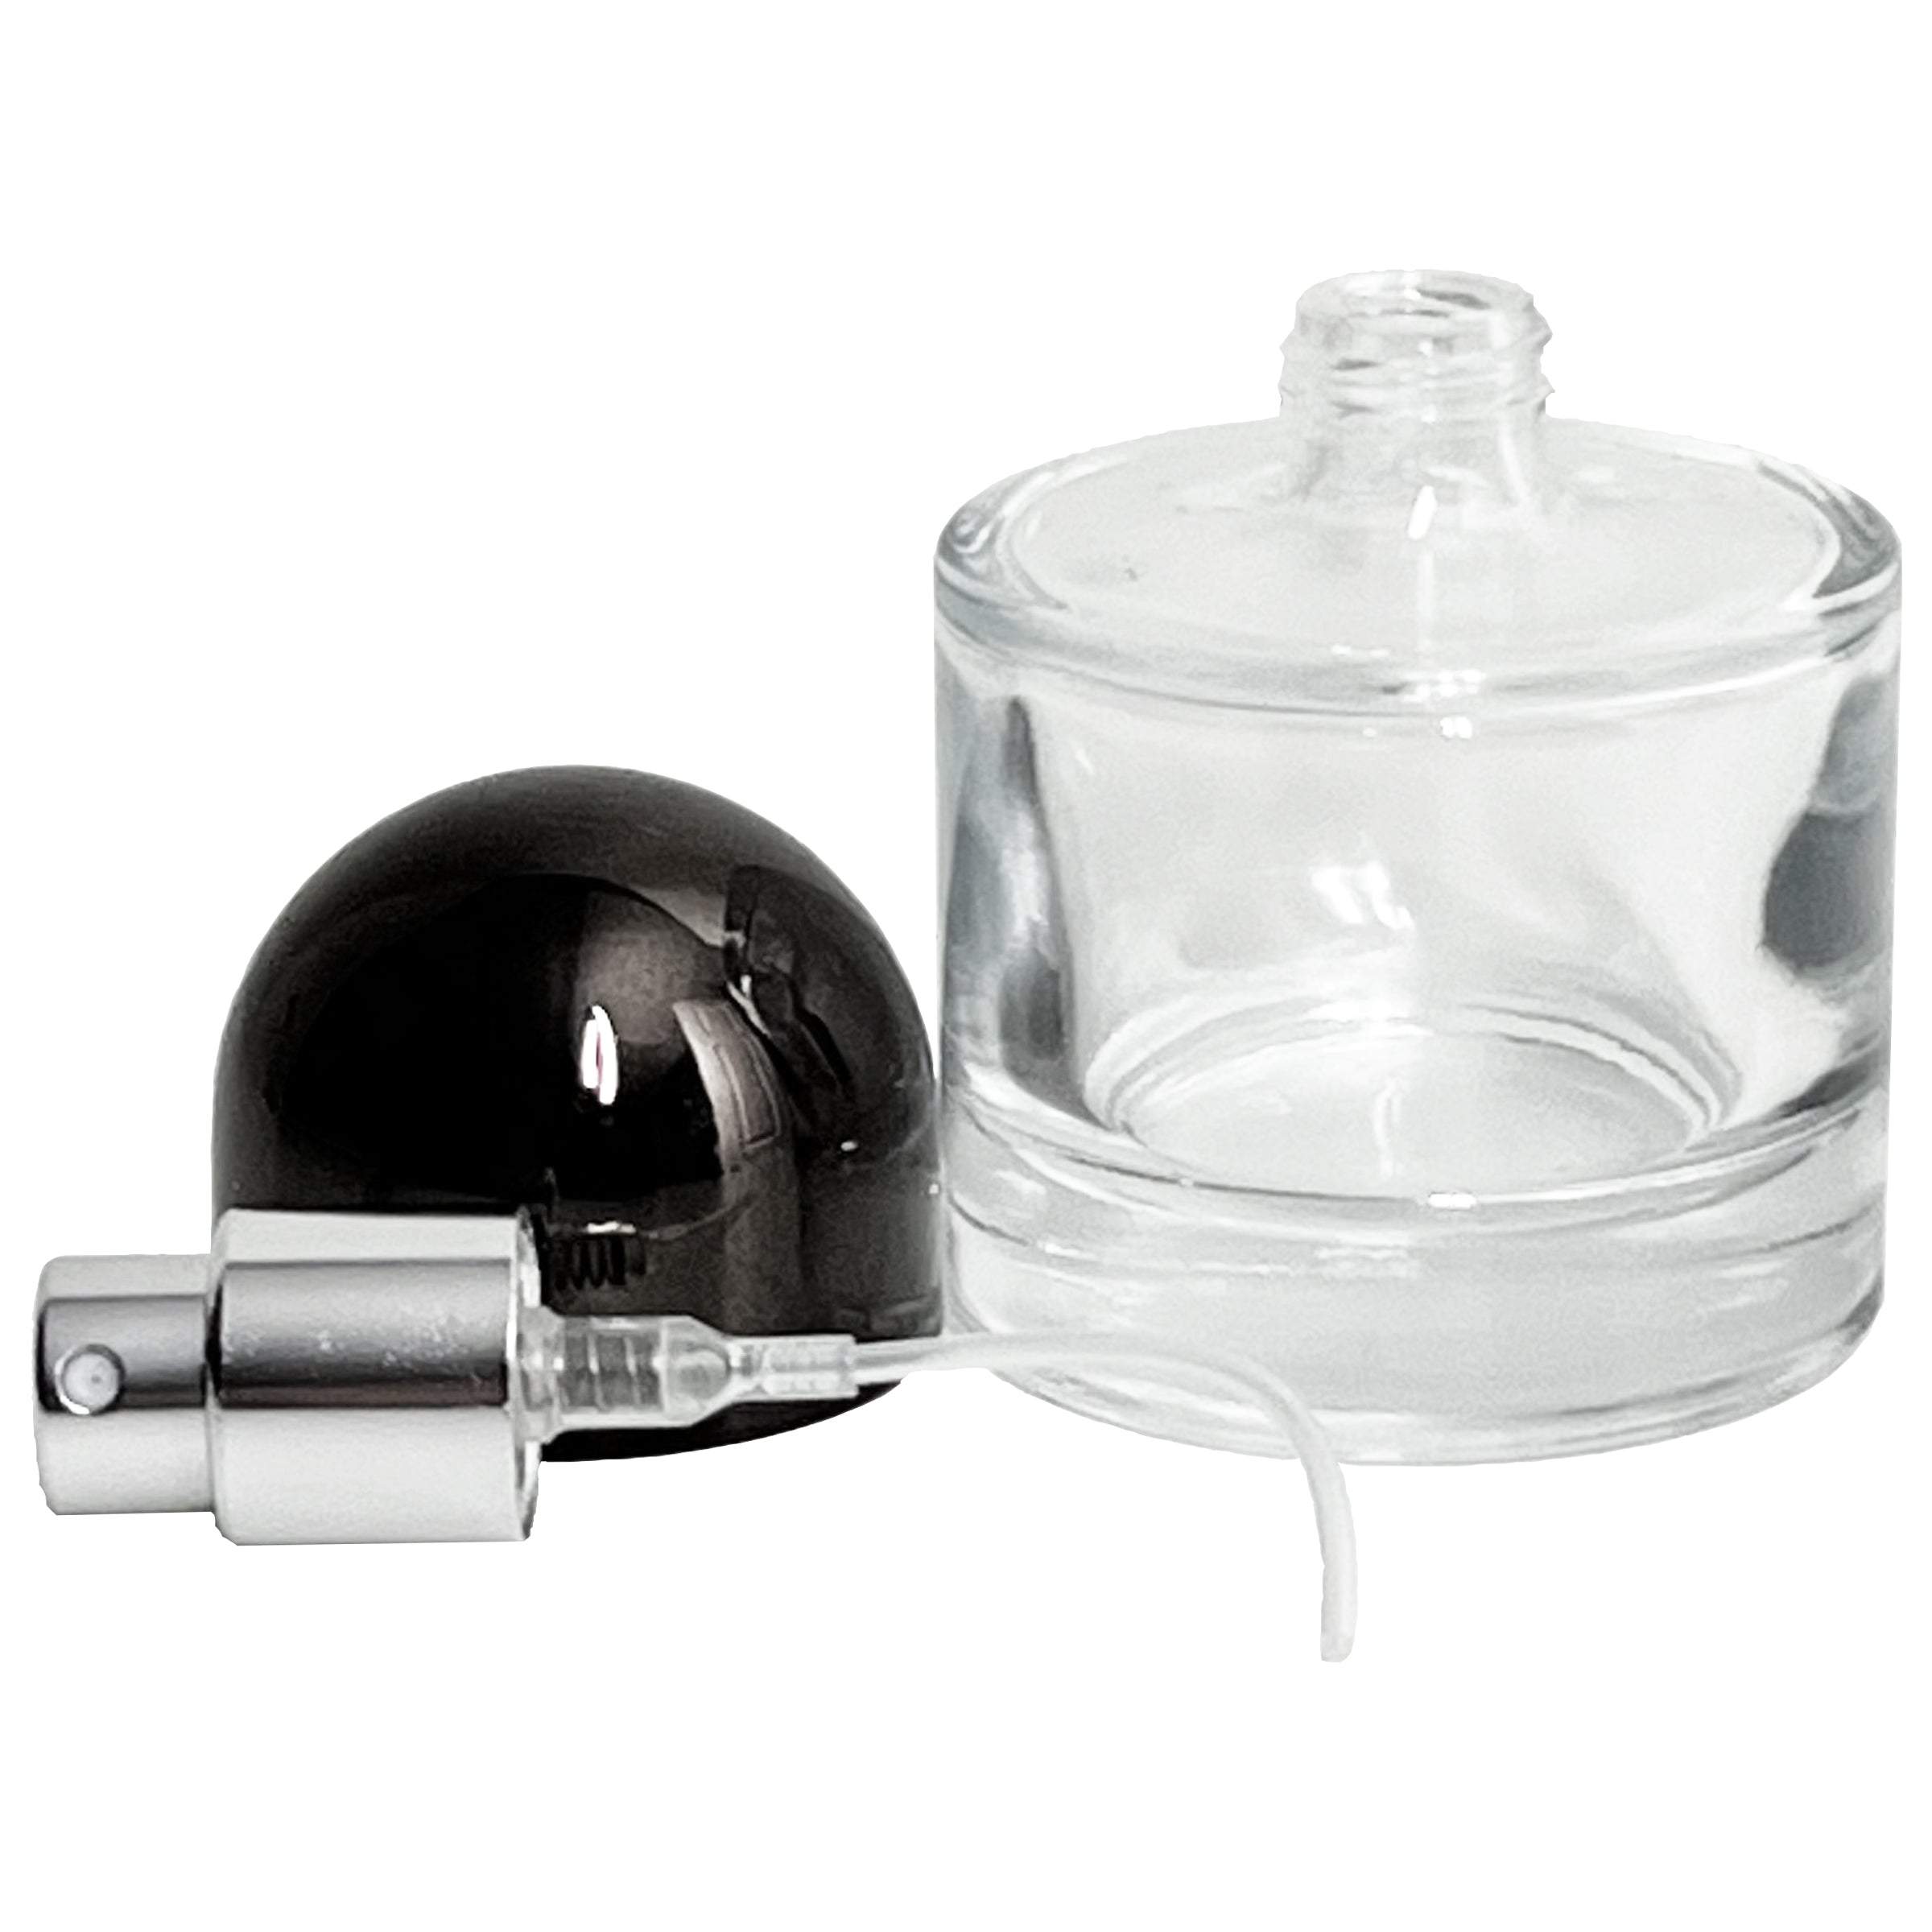 30ml 1oz Round metallic Black Half Cap Thick Glass Spray Bottles